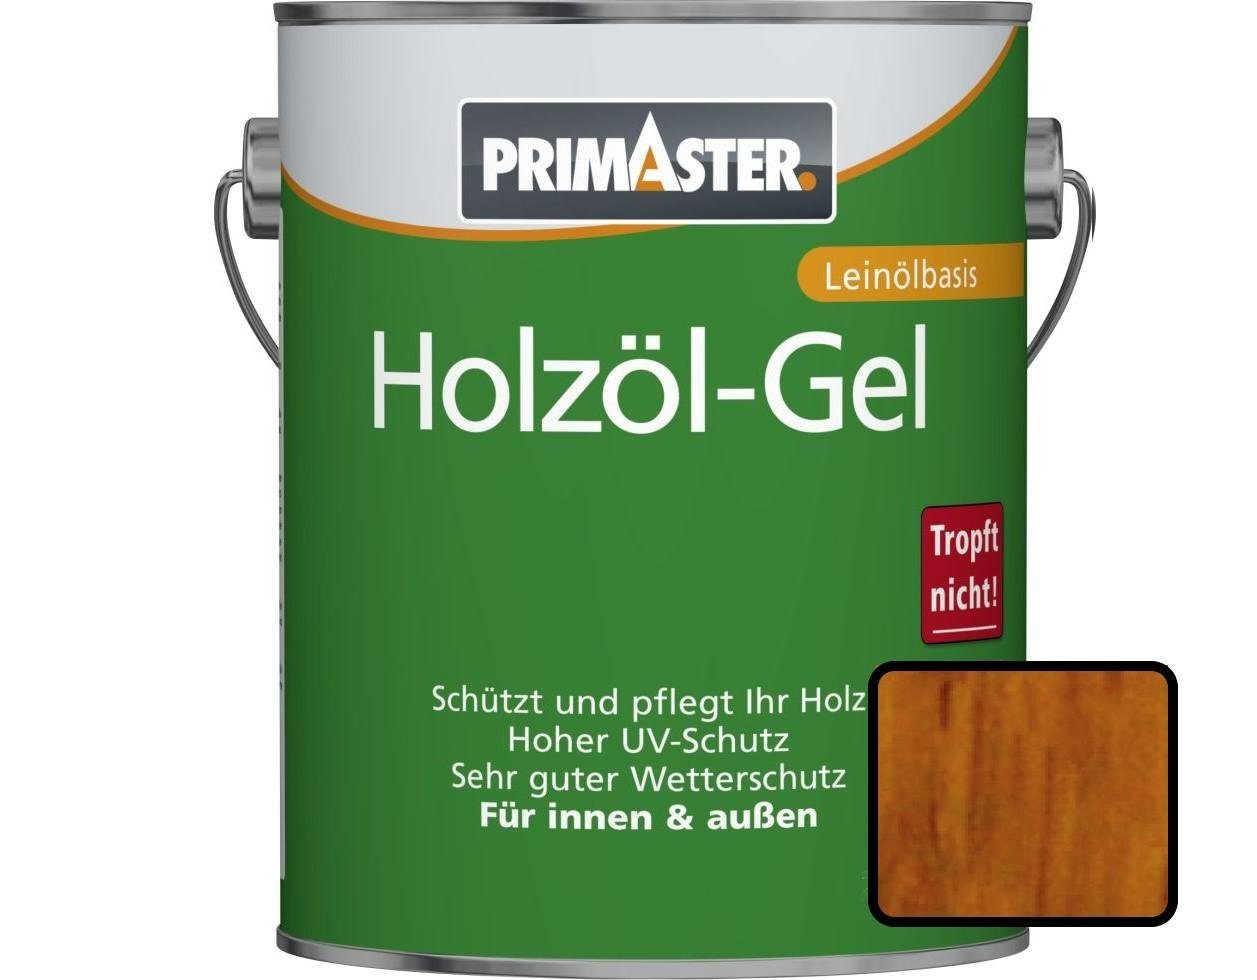 Primaster Hartholzöl Primaster Holzöl-Gel 5 L eiche | Holzöle